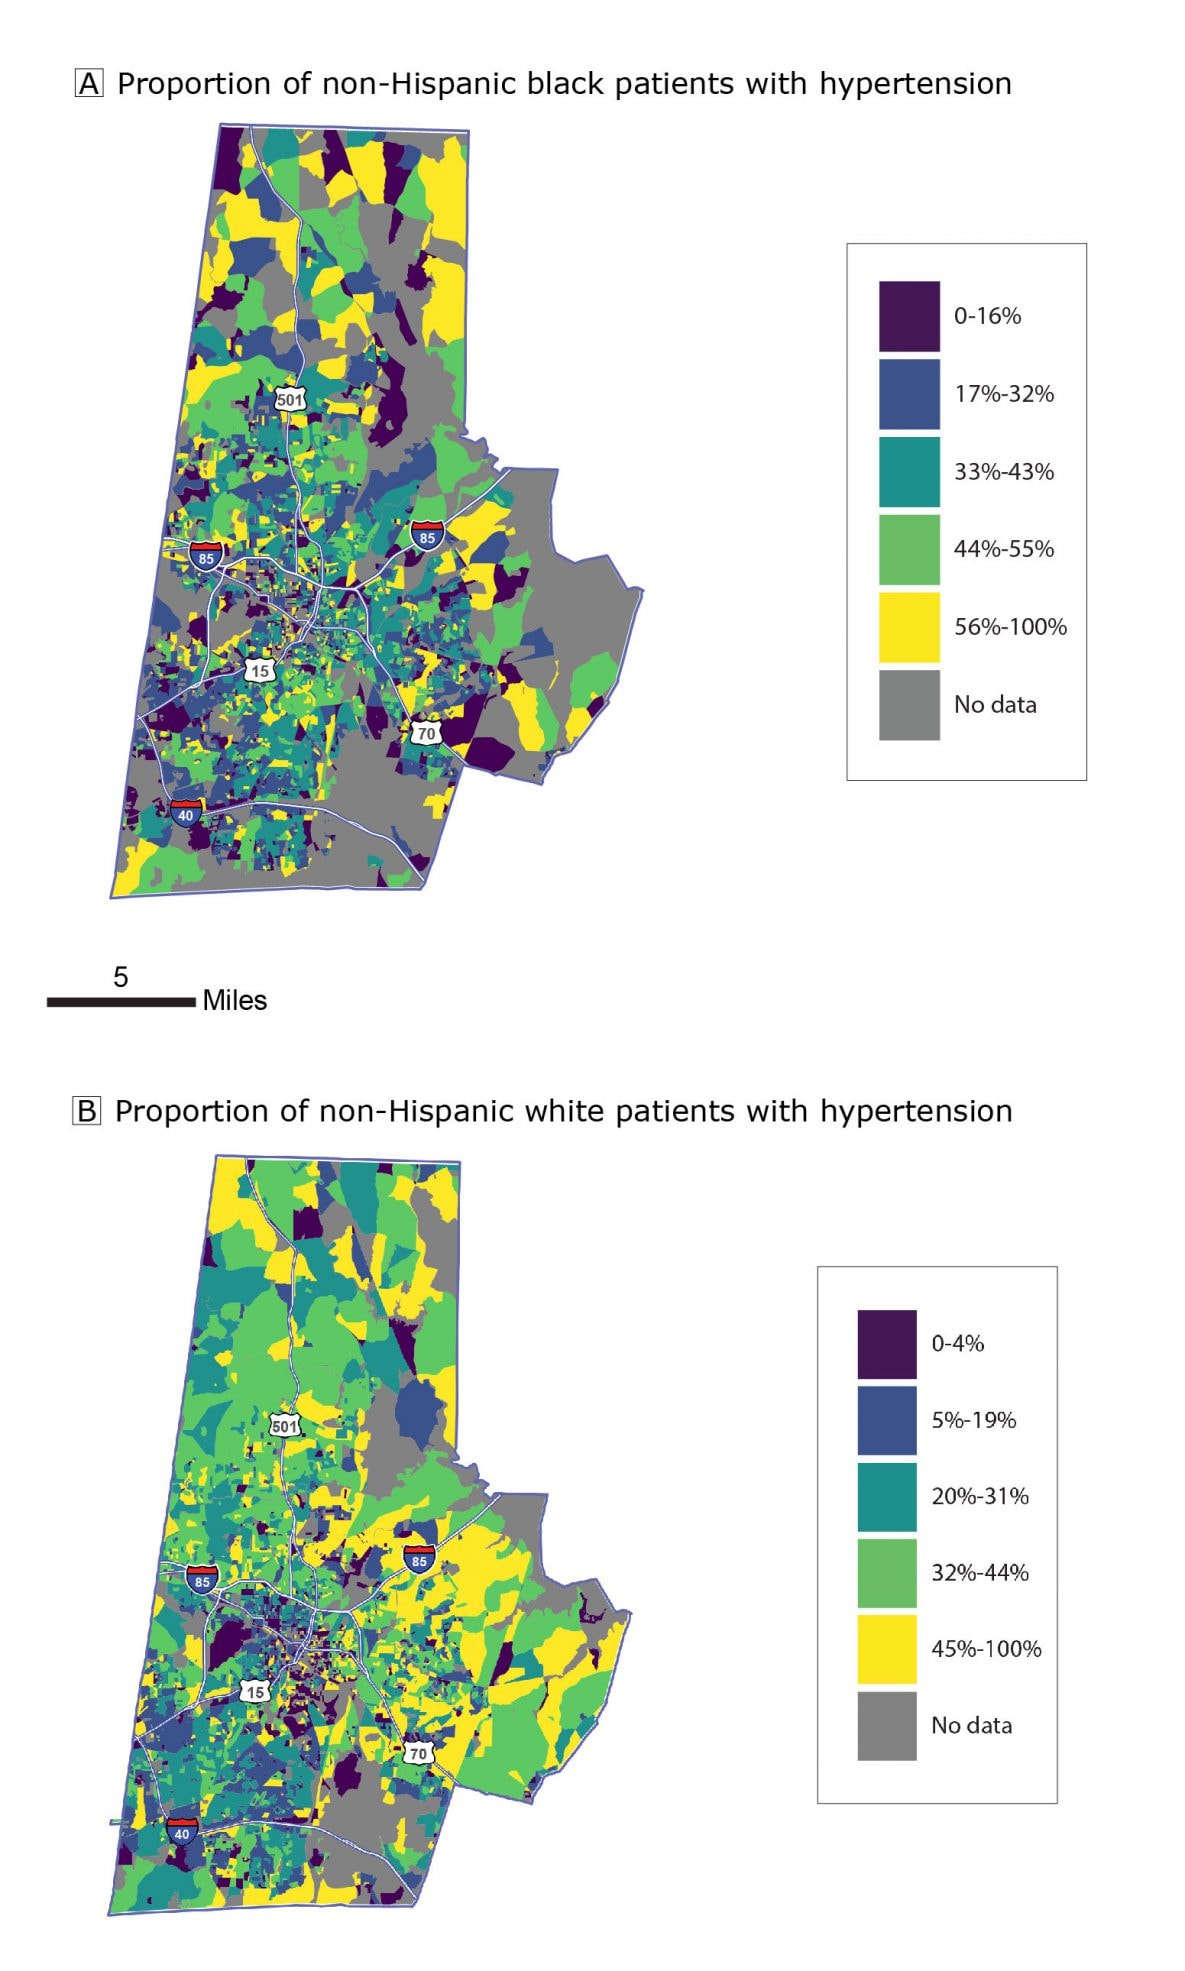 Proportion of patients with hypertension in 2010 Census blocks, by quintile, Duke Medicine Enterprise Data Warehouse patient data, Durham, North Carolina. A, Non-Hispanic black patients. B, Non-Hispanic white patients.